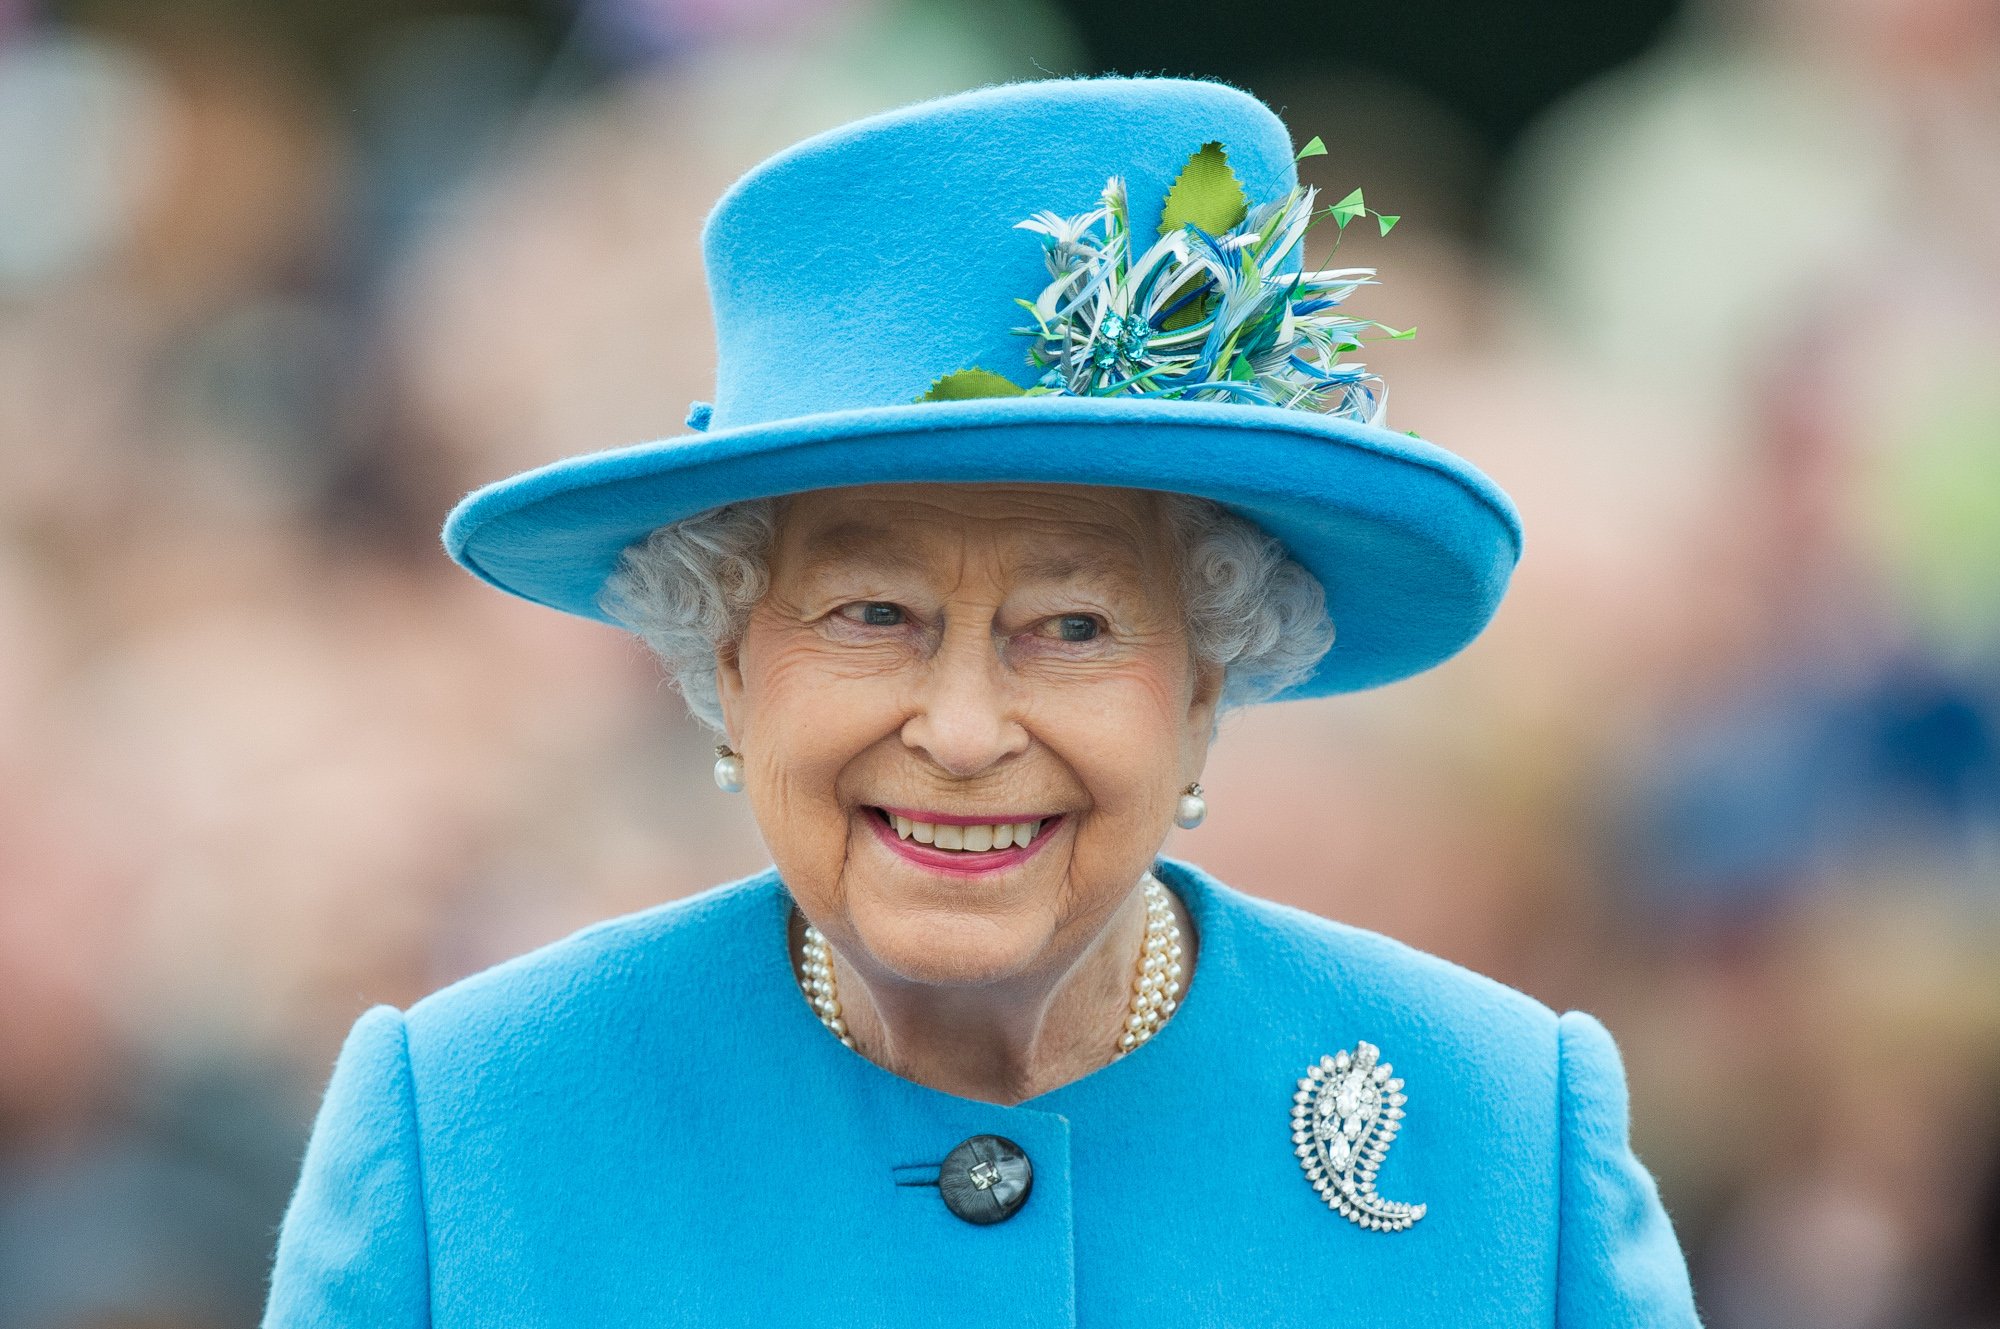 Queen Elizabeth II wearing a matching light blue coat and hat.